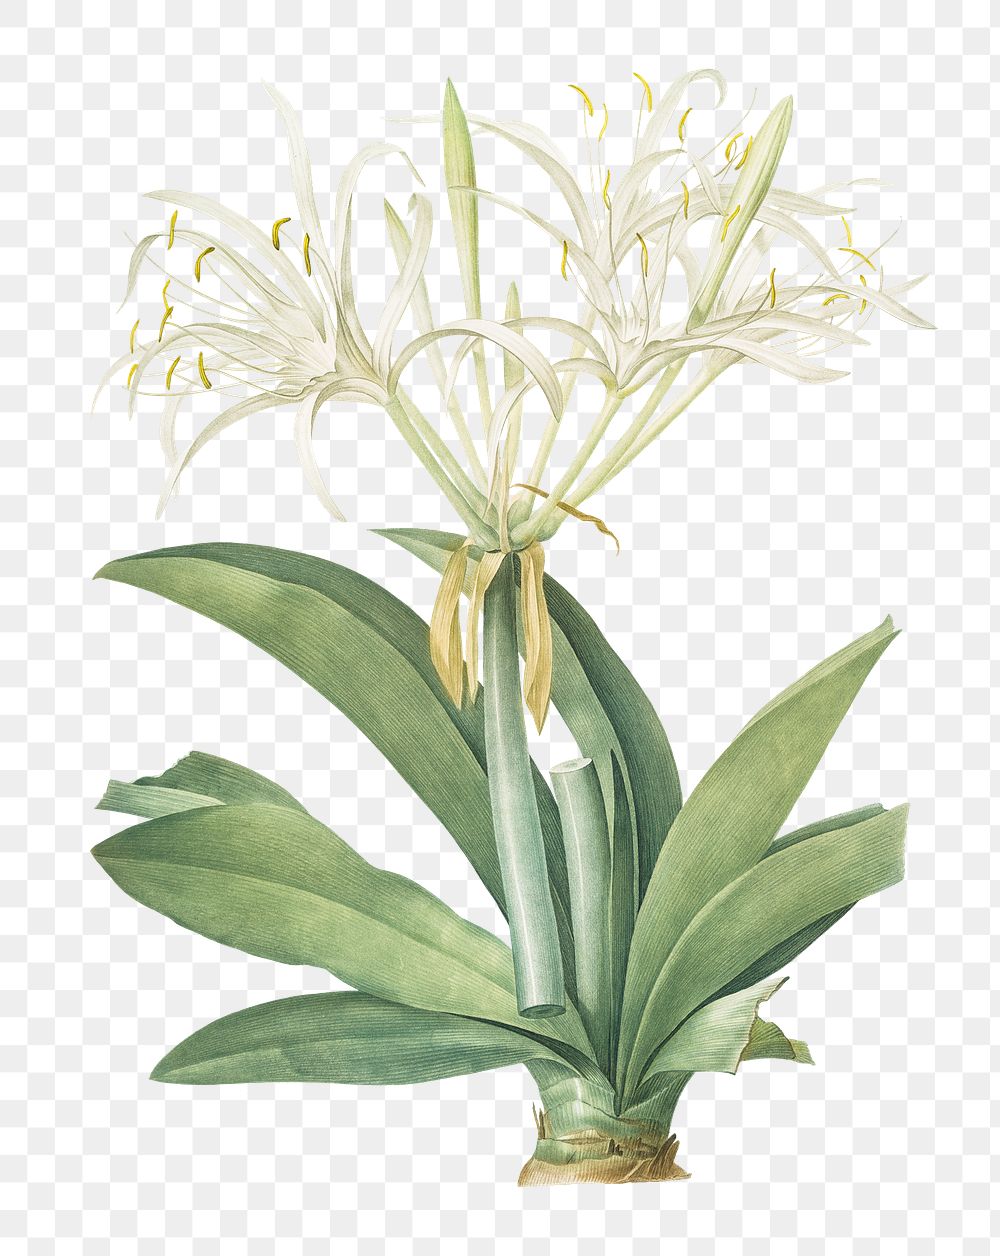 Pancratium speciosum png sticker, vintage botanical illustration, transparent background